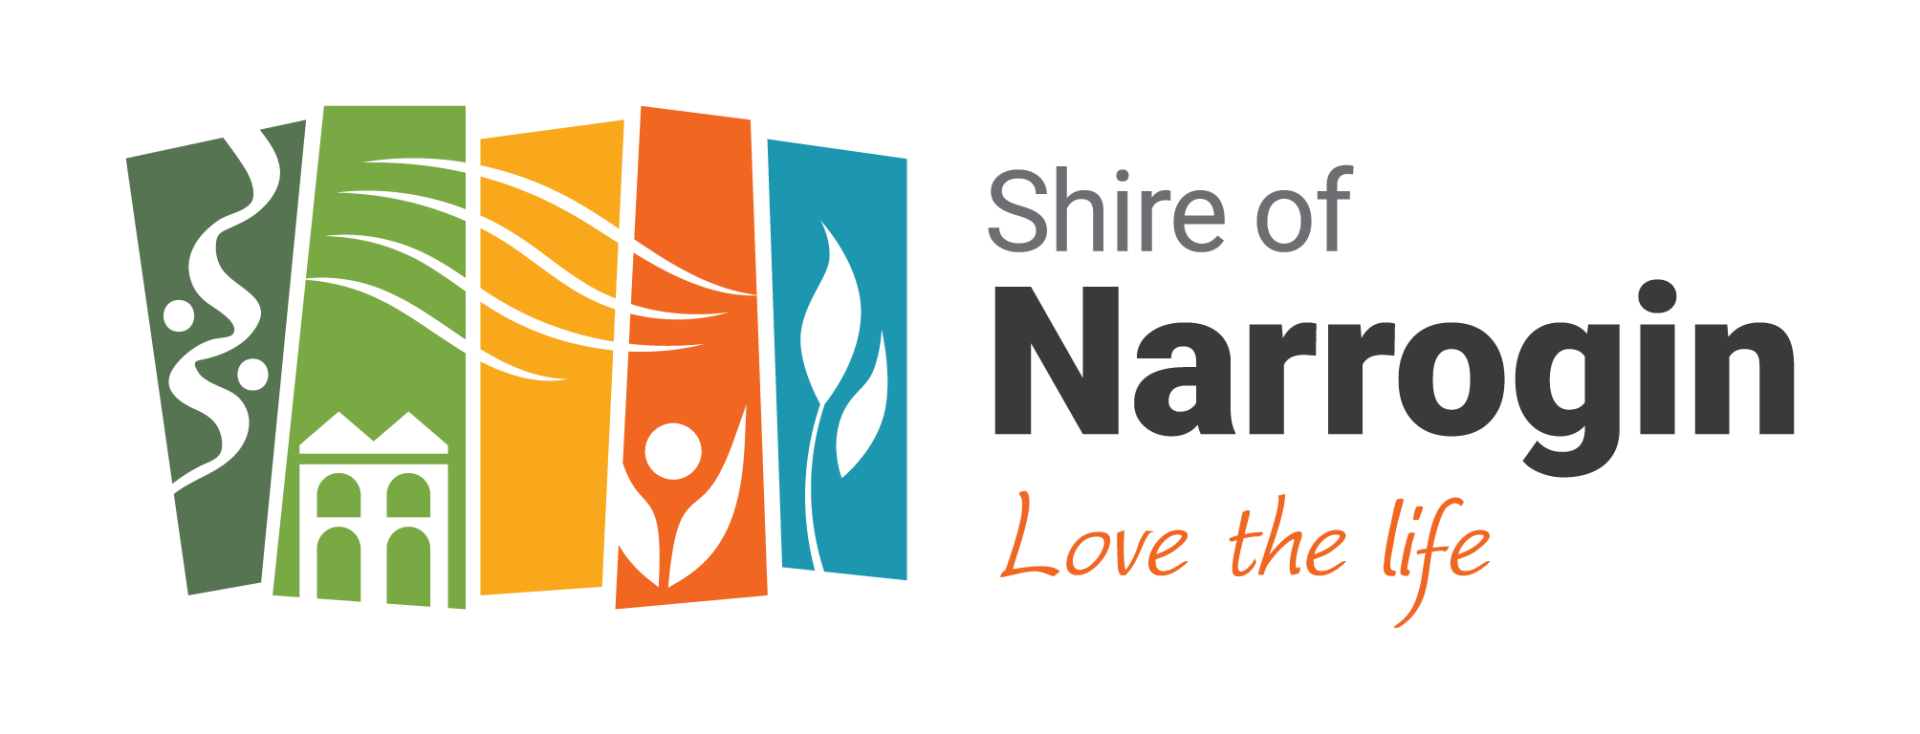 Media Release - Shire of Narrogin Secures $207,560 for Bushfire Mitigation